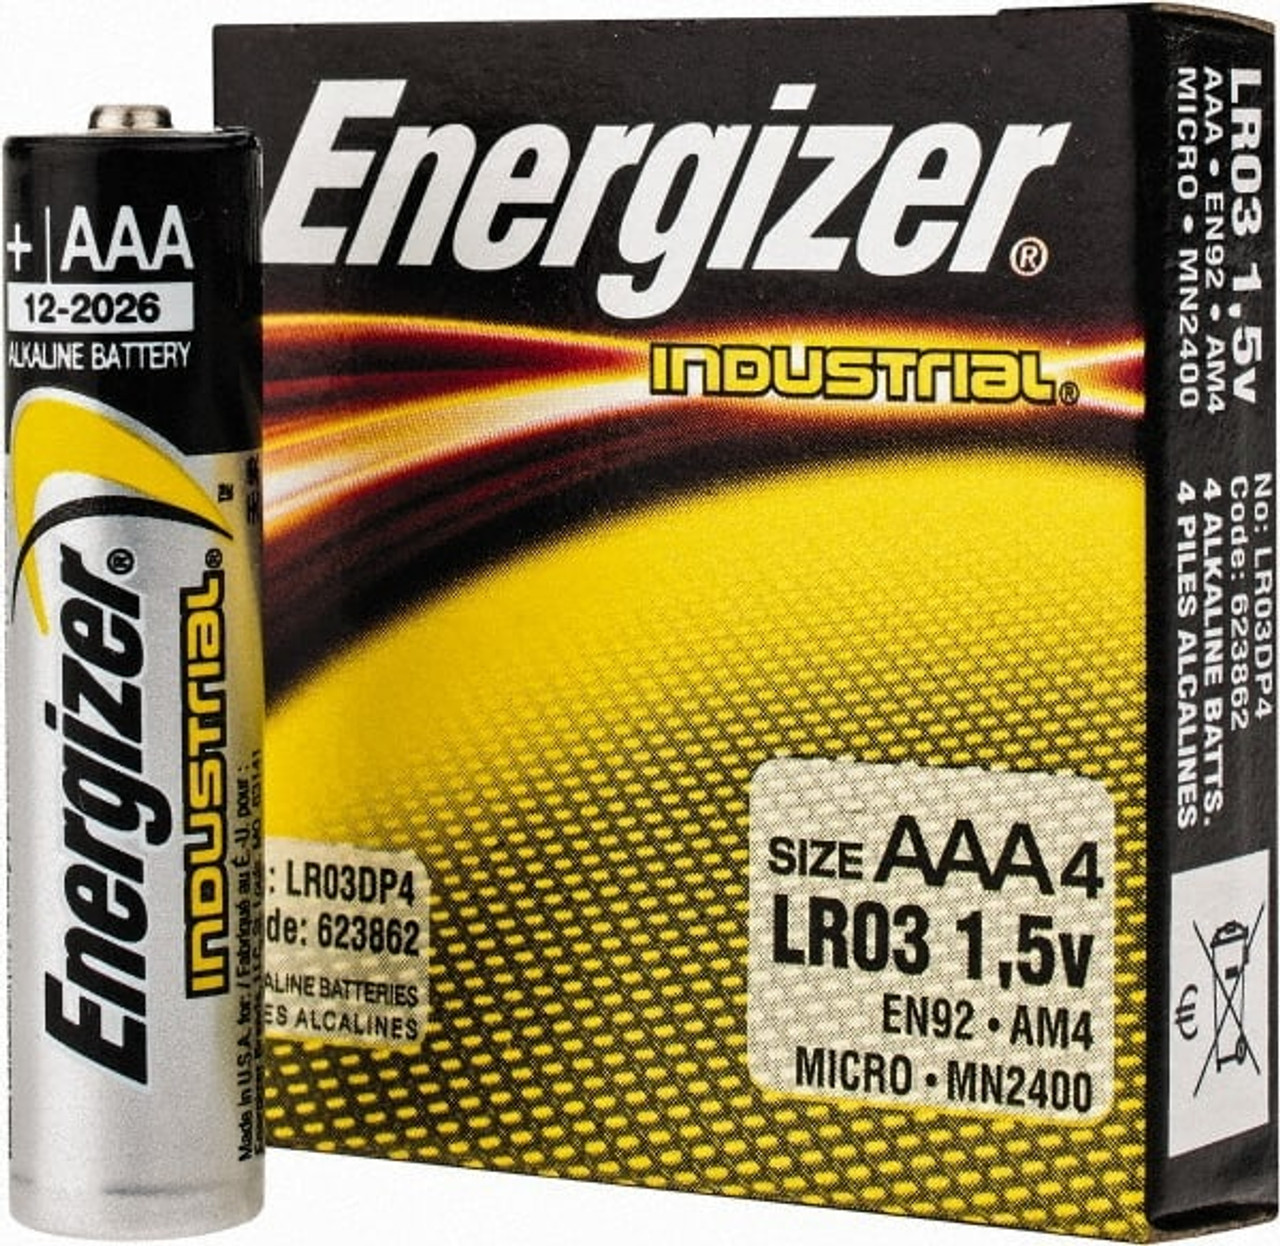 Energizer Pack (4) Size AAA, Alkaline, Standard Batteries 1.5